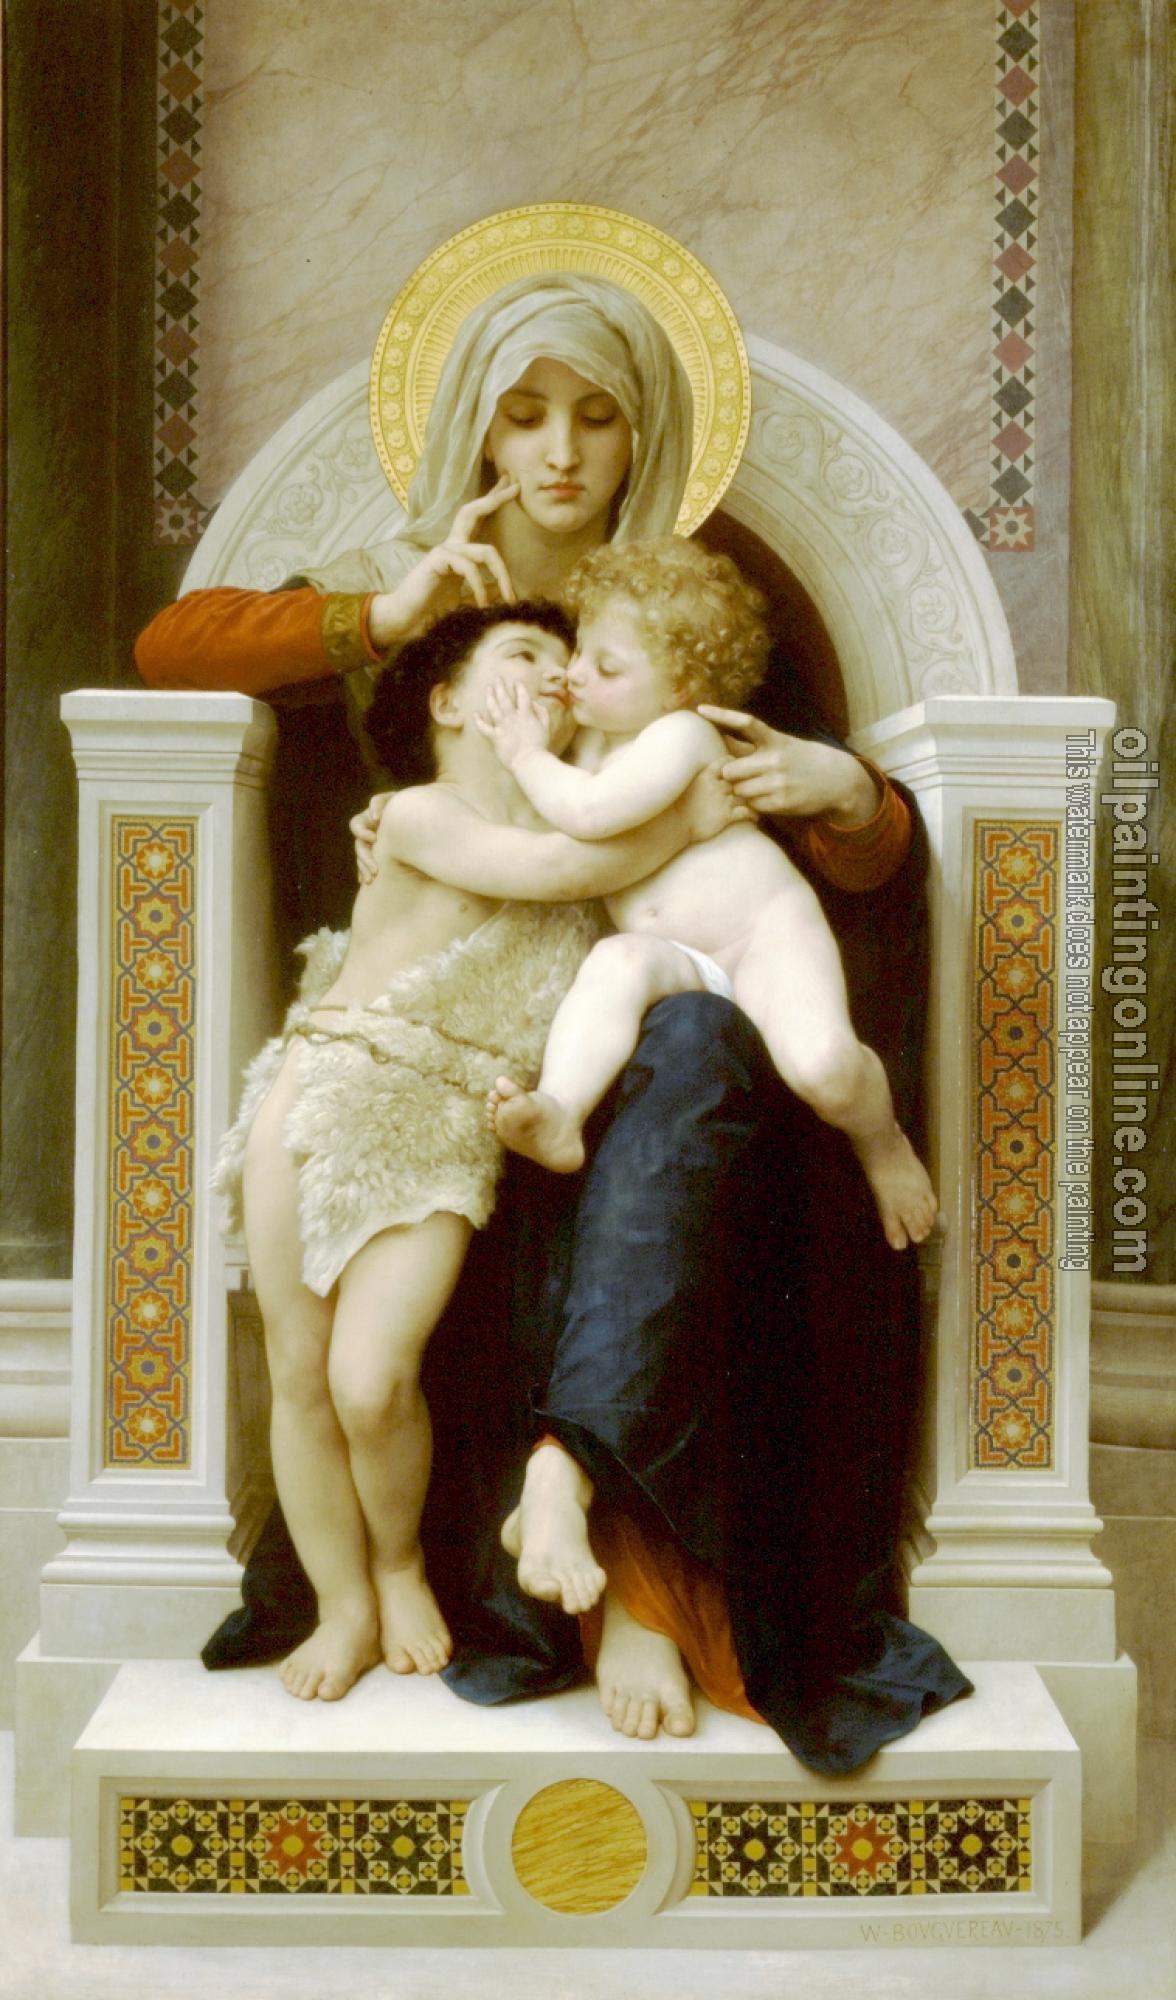 Bouguereau, William-Adolphe - The Virgin, the Baby Jesus and Saint John the Baptist